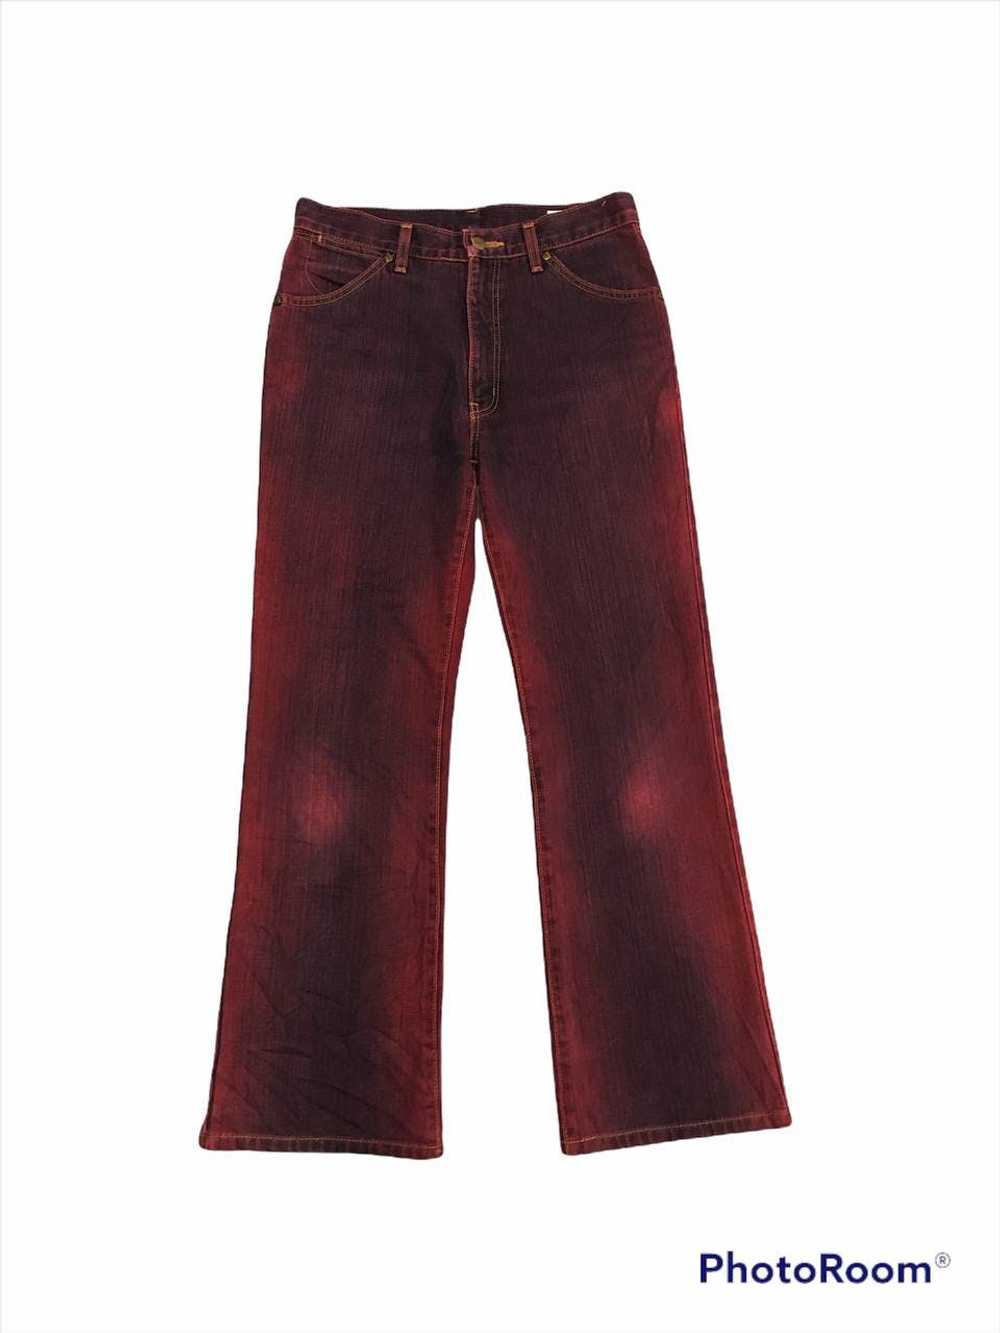 Vintage Wrangler Faded Marron Denim Pants - image 1